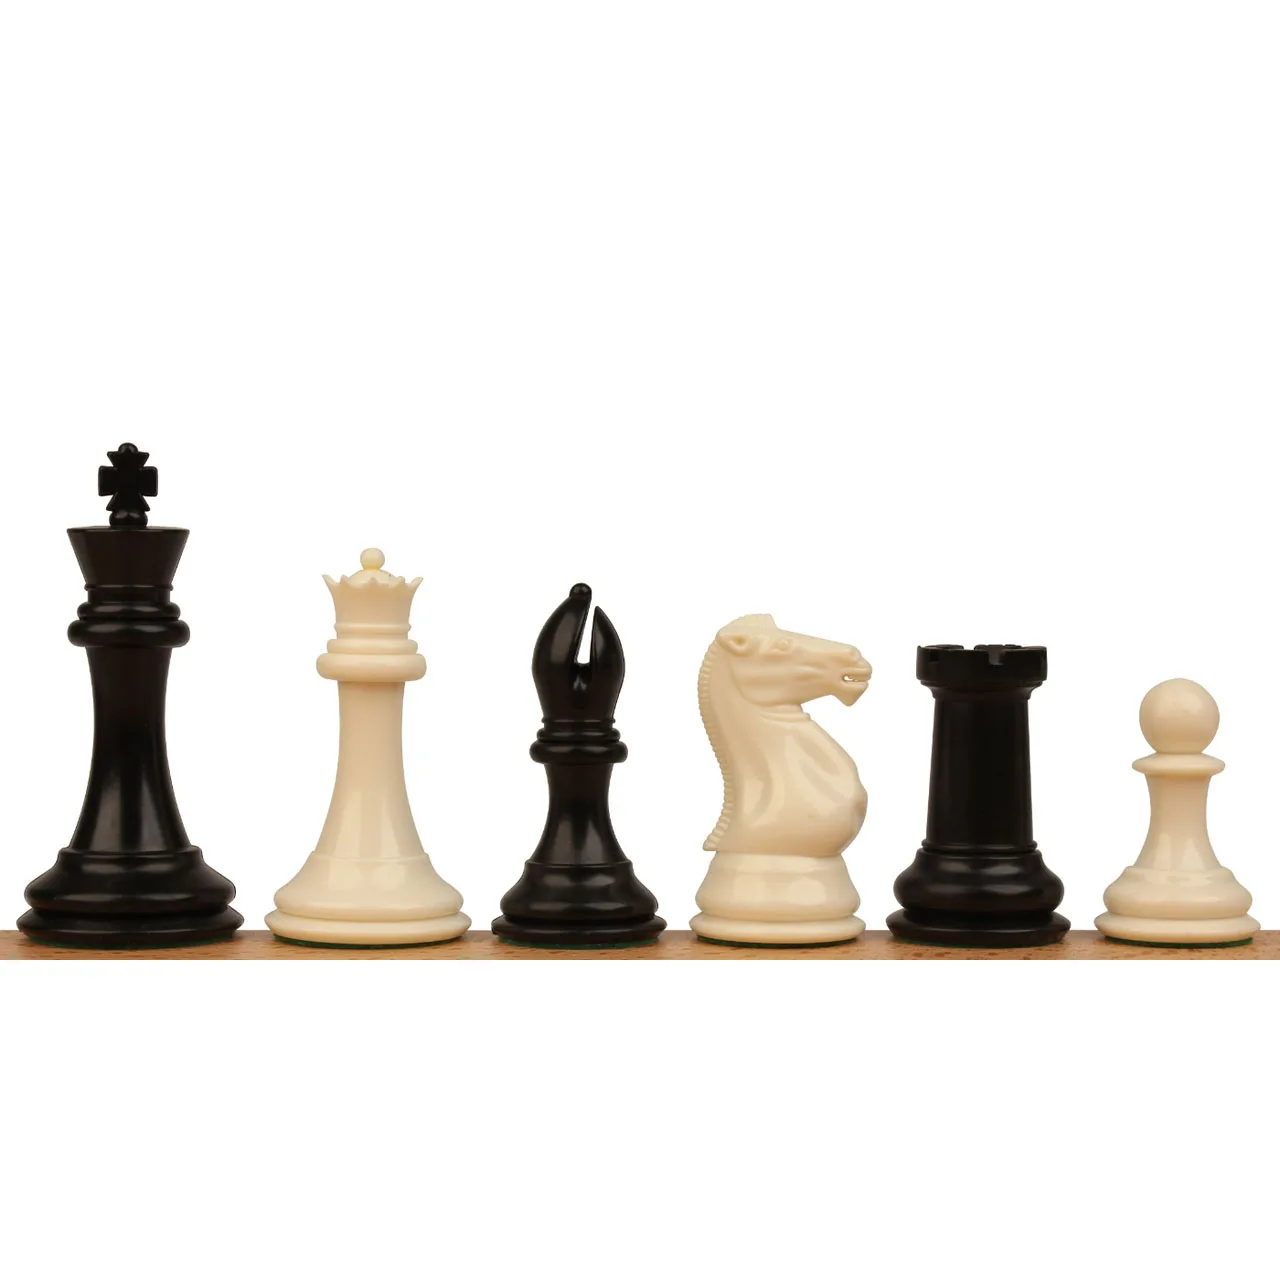 Best Chess Set Ever XL - Quadruple Weighted